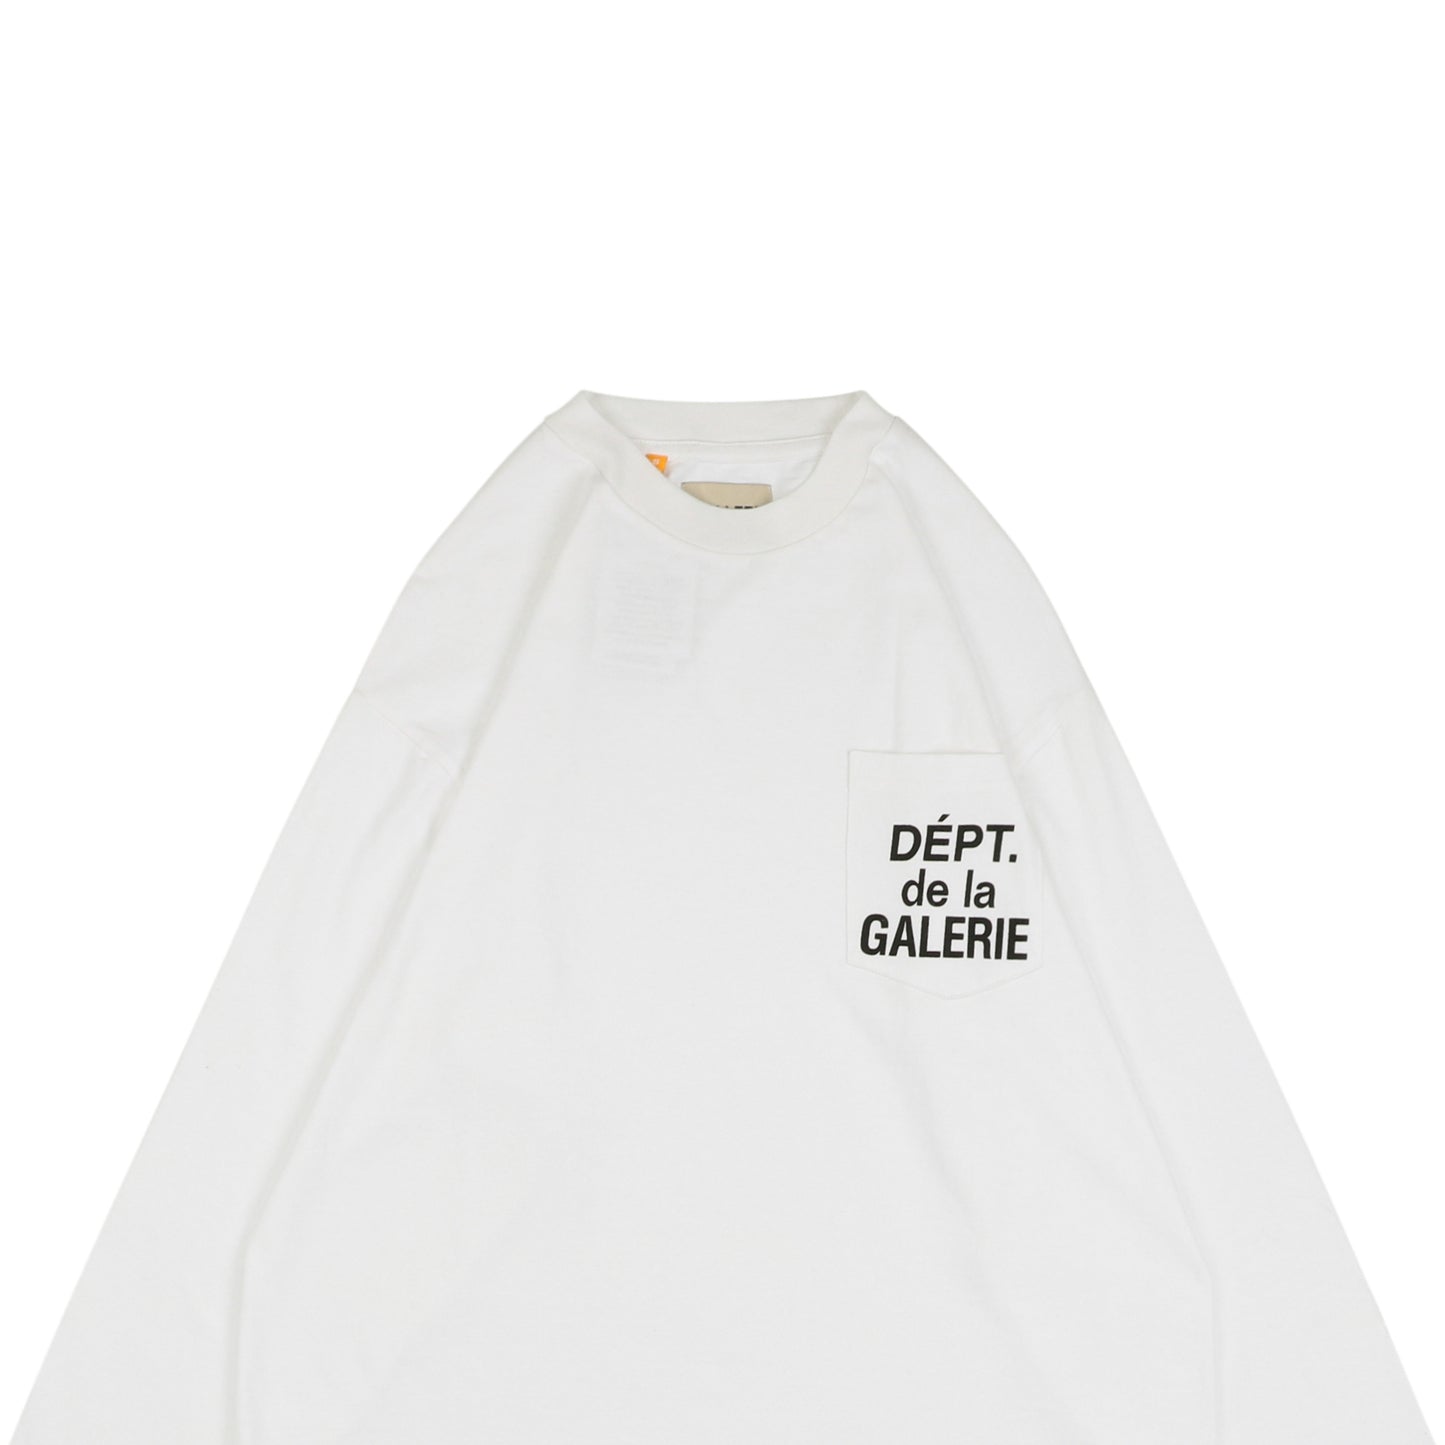 Gallery Dept White Sweatshirt